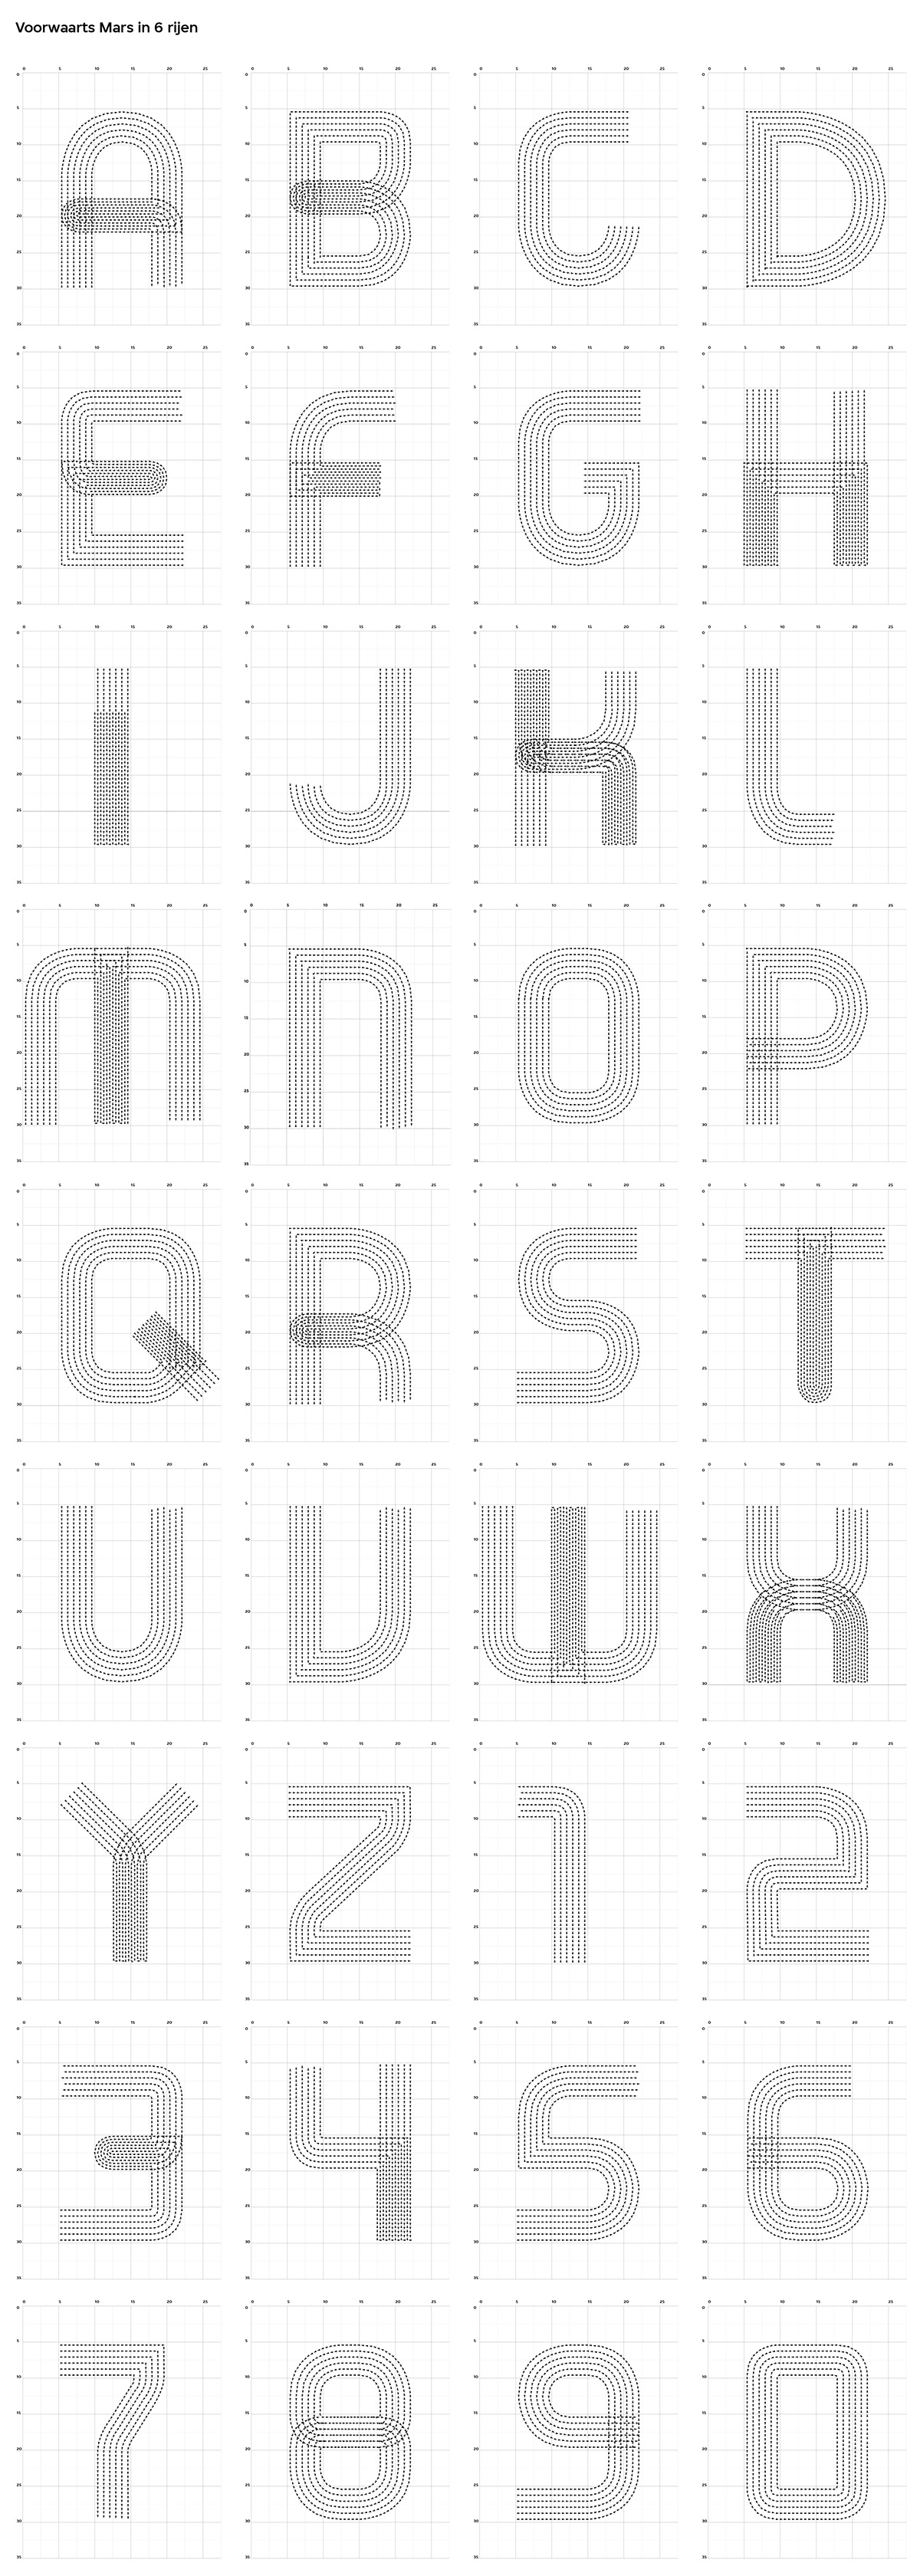 font type marching marchingband Muziek orkest orchestra graduation typedesign lettertype mars Artez animated graphicdesign alphabet